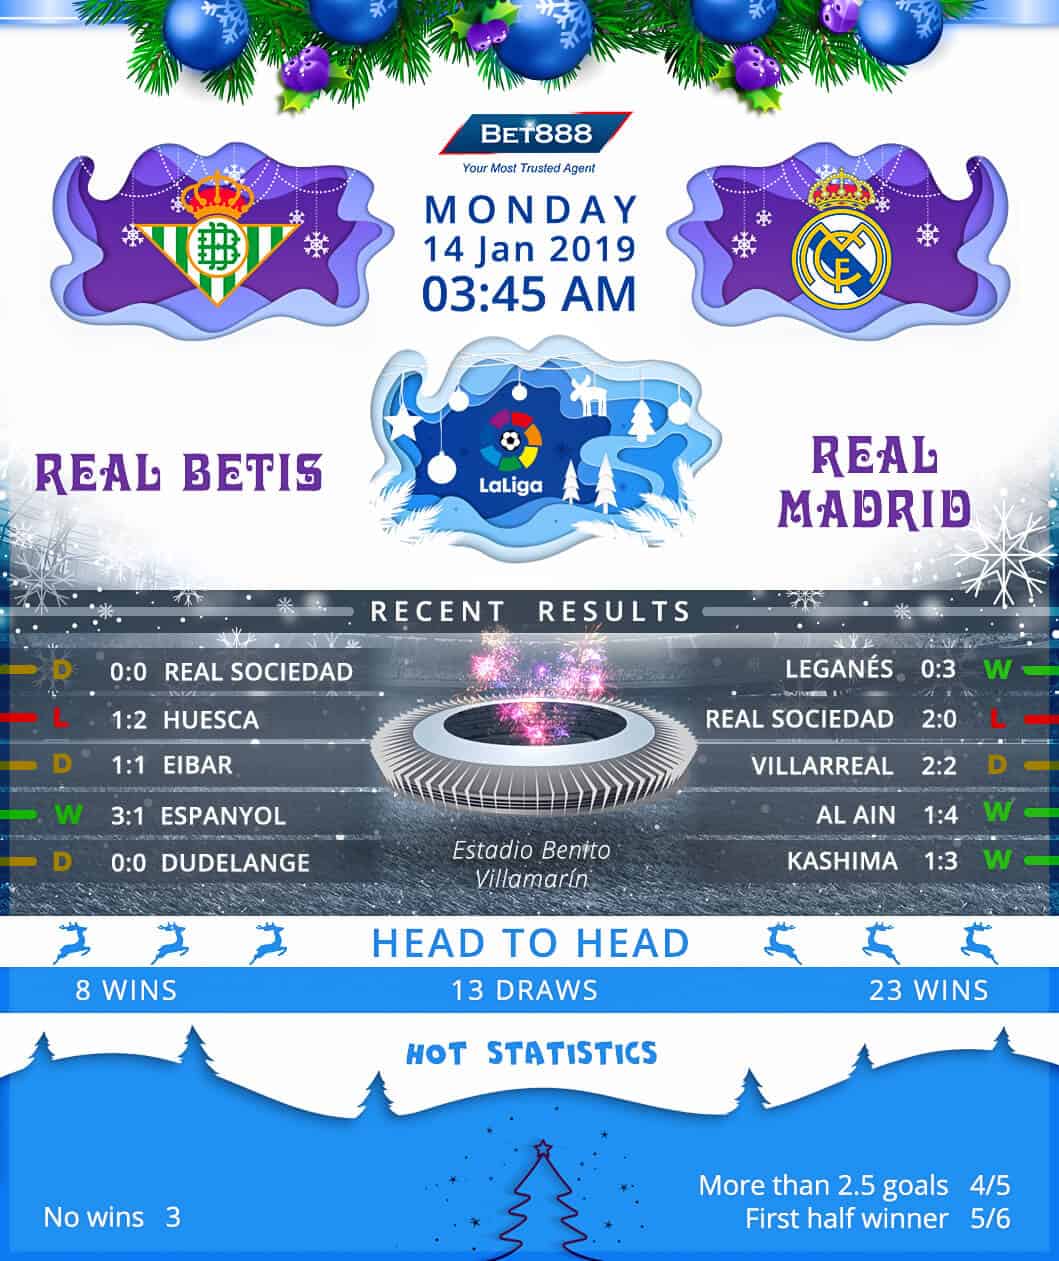 Real Betis vs Real Madrid 14/01/19